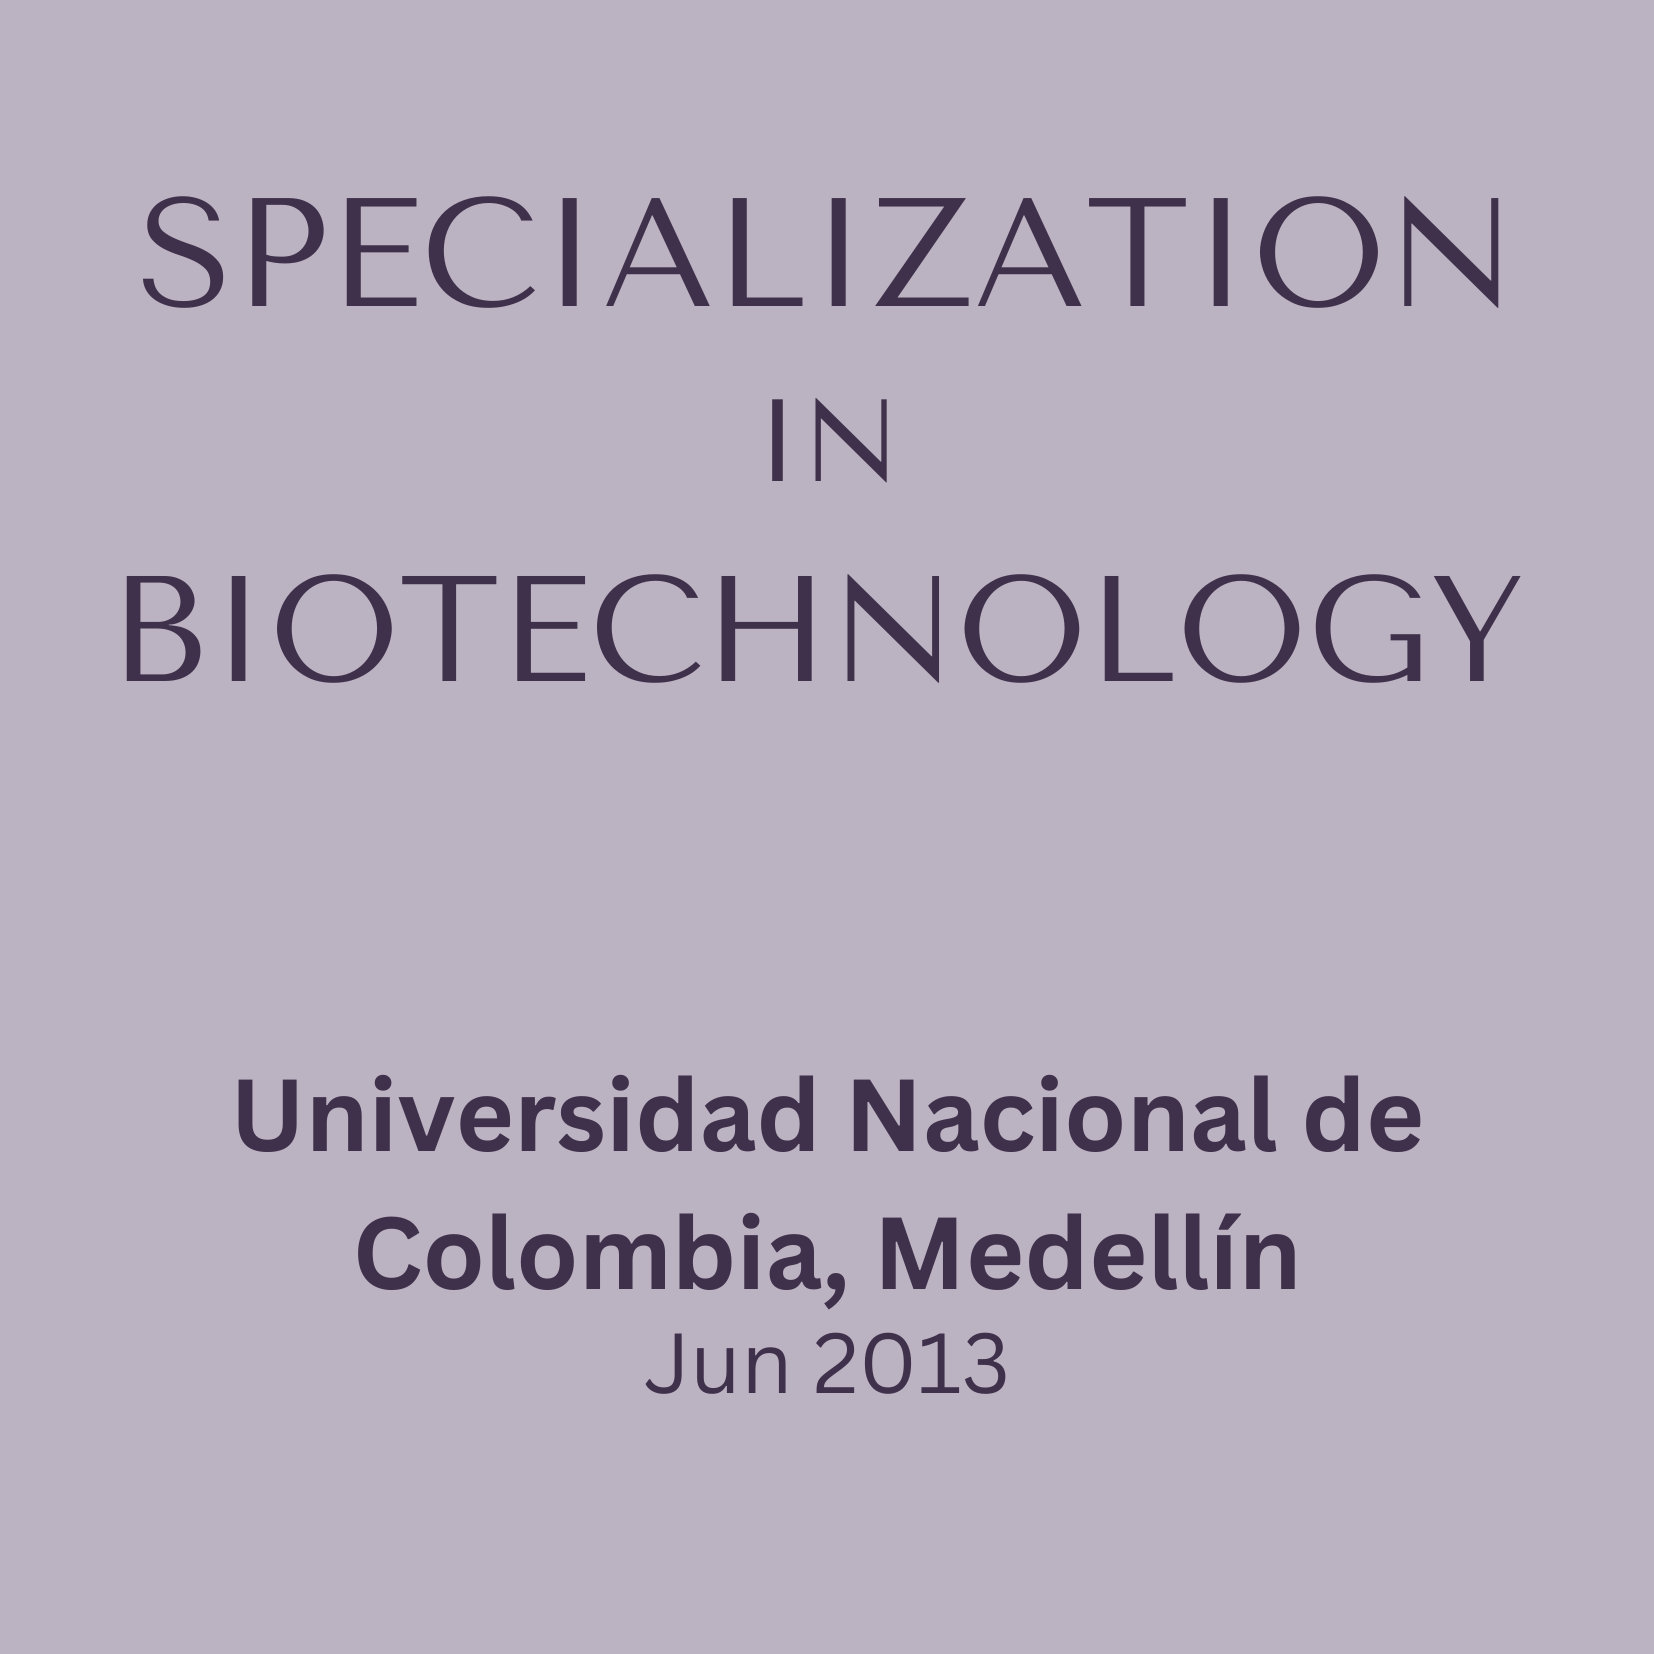 Specialization in biotechnology